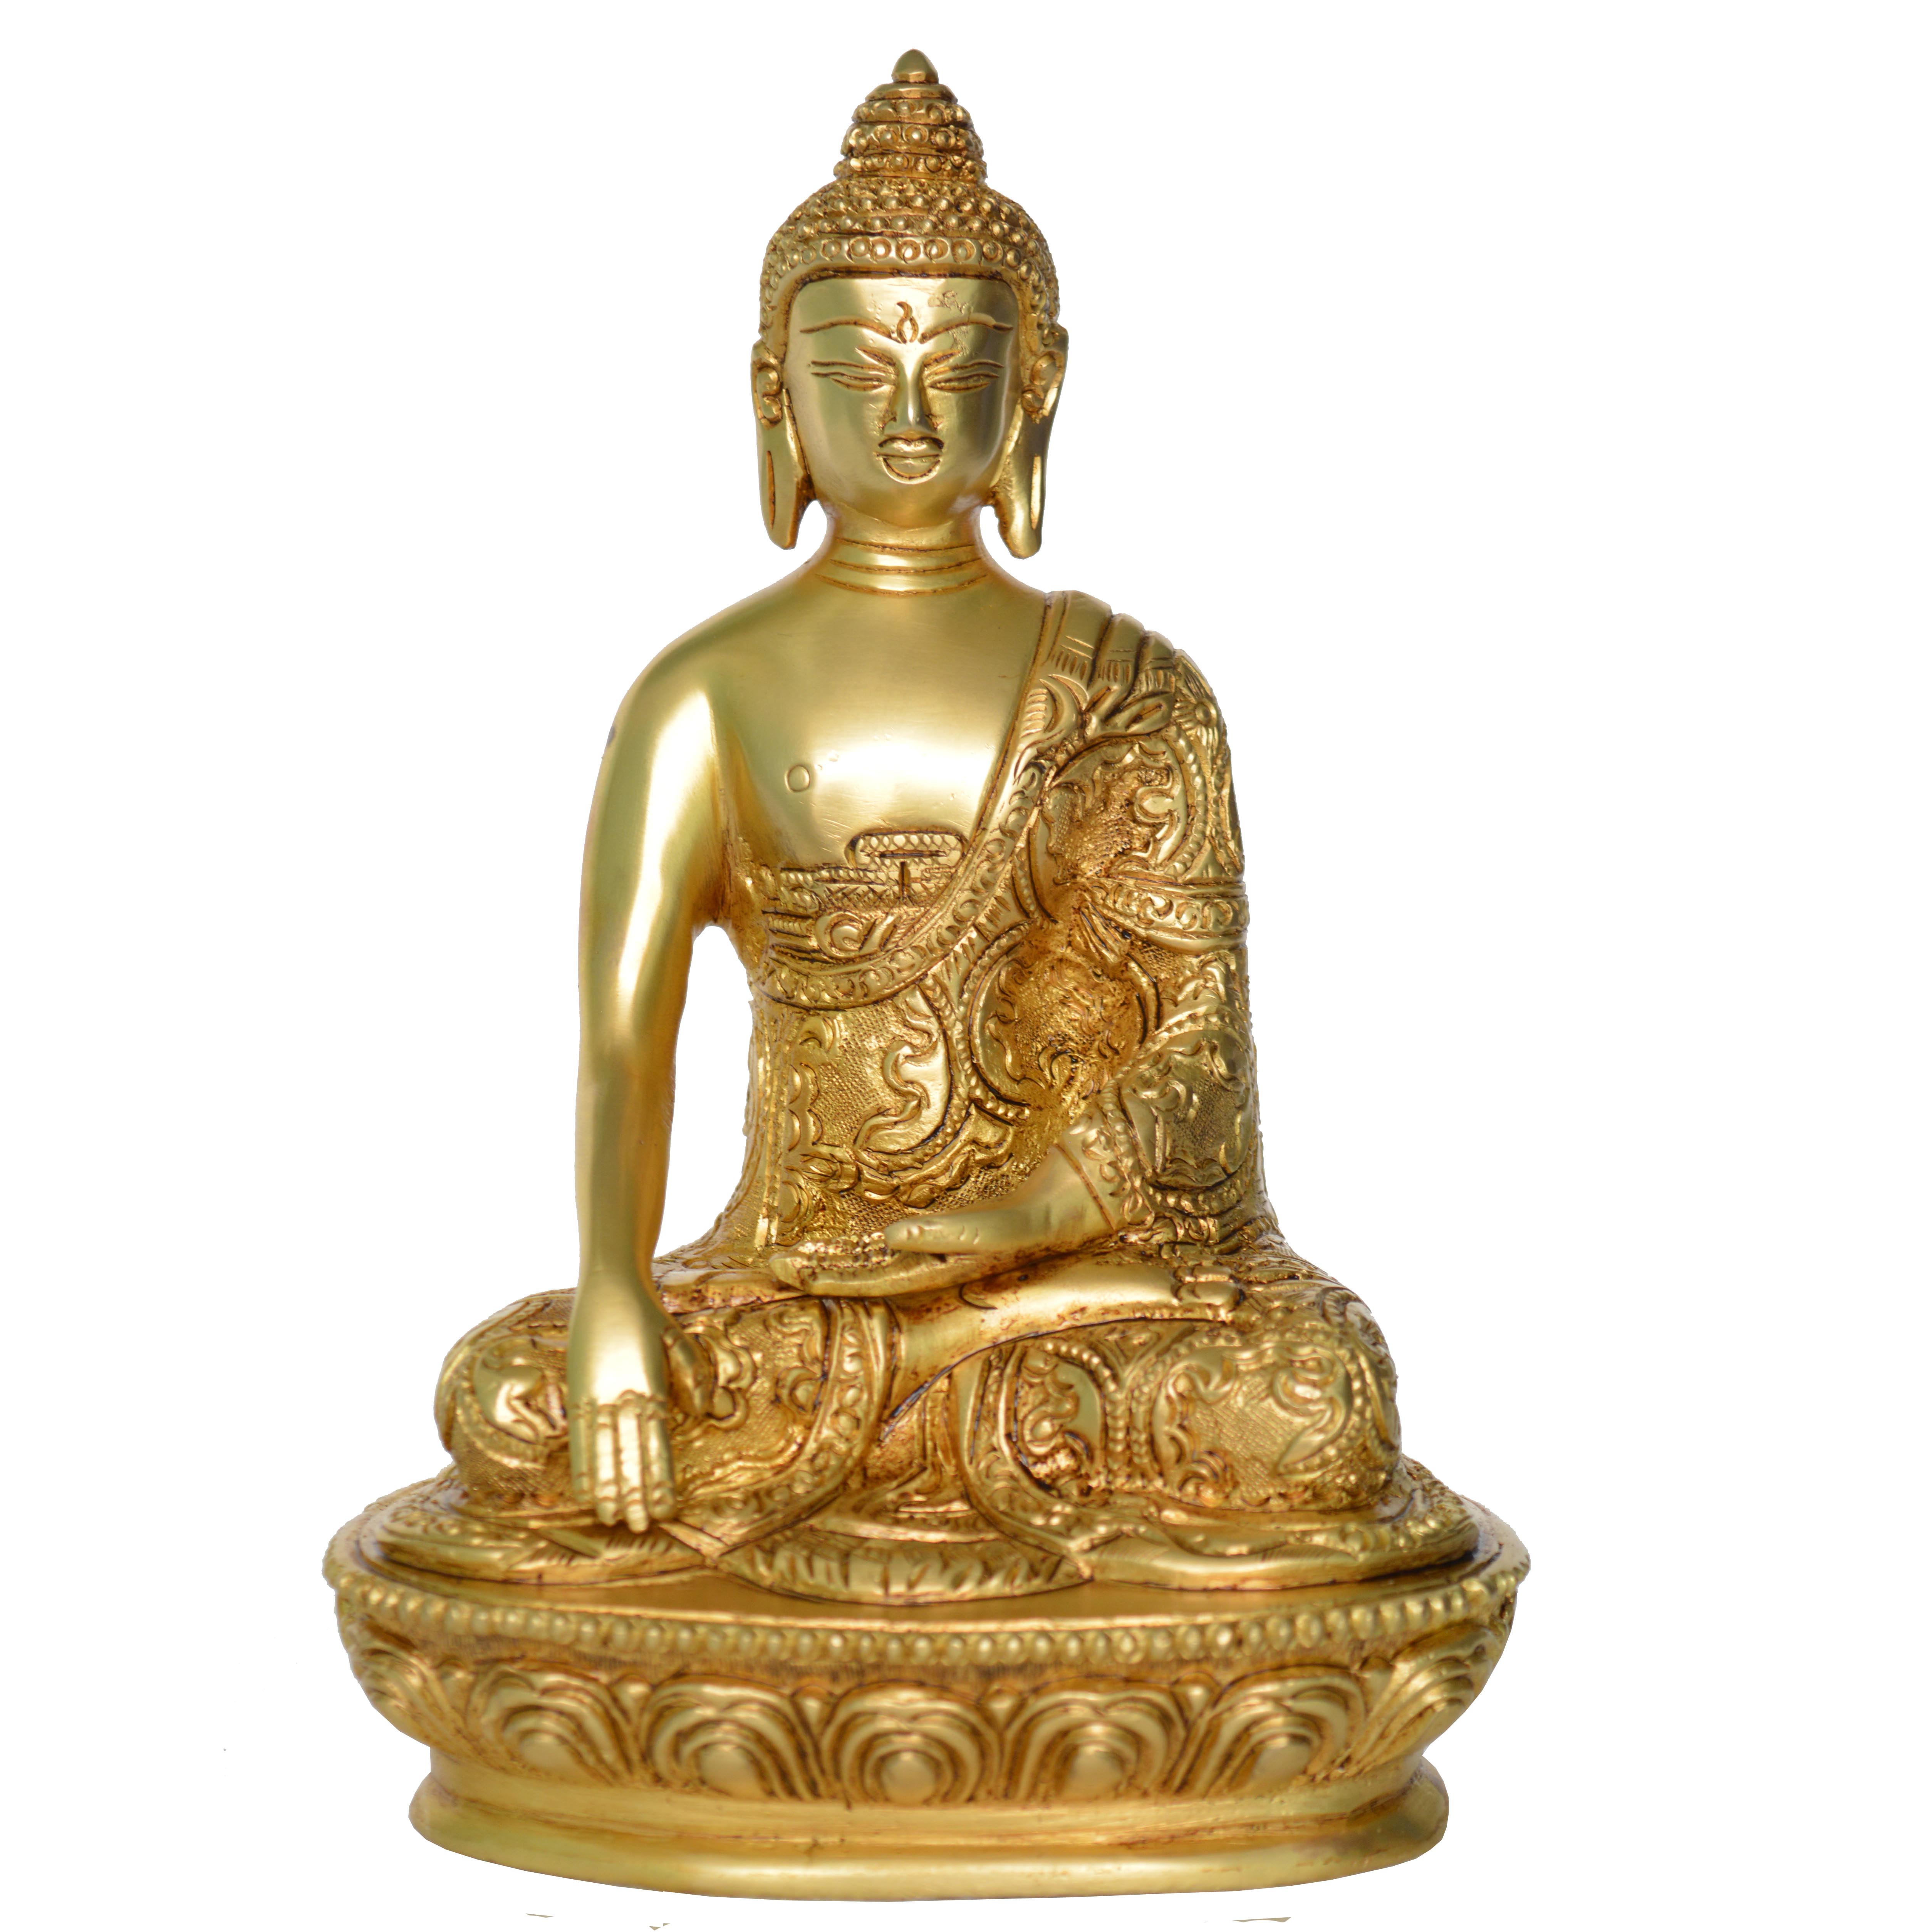 Buddha Statue Decorative Showpiece Religious Figure - Buy Buddha Online